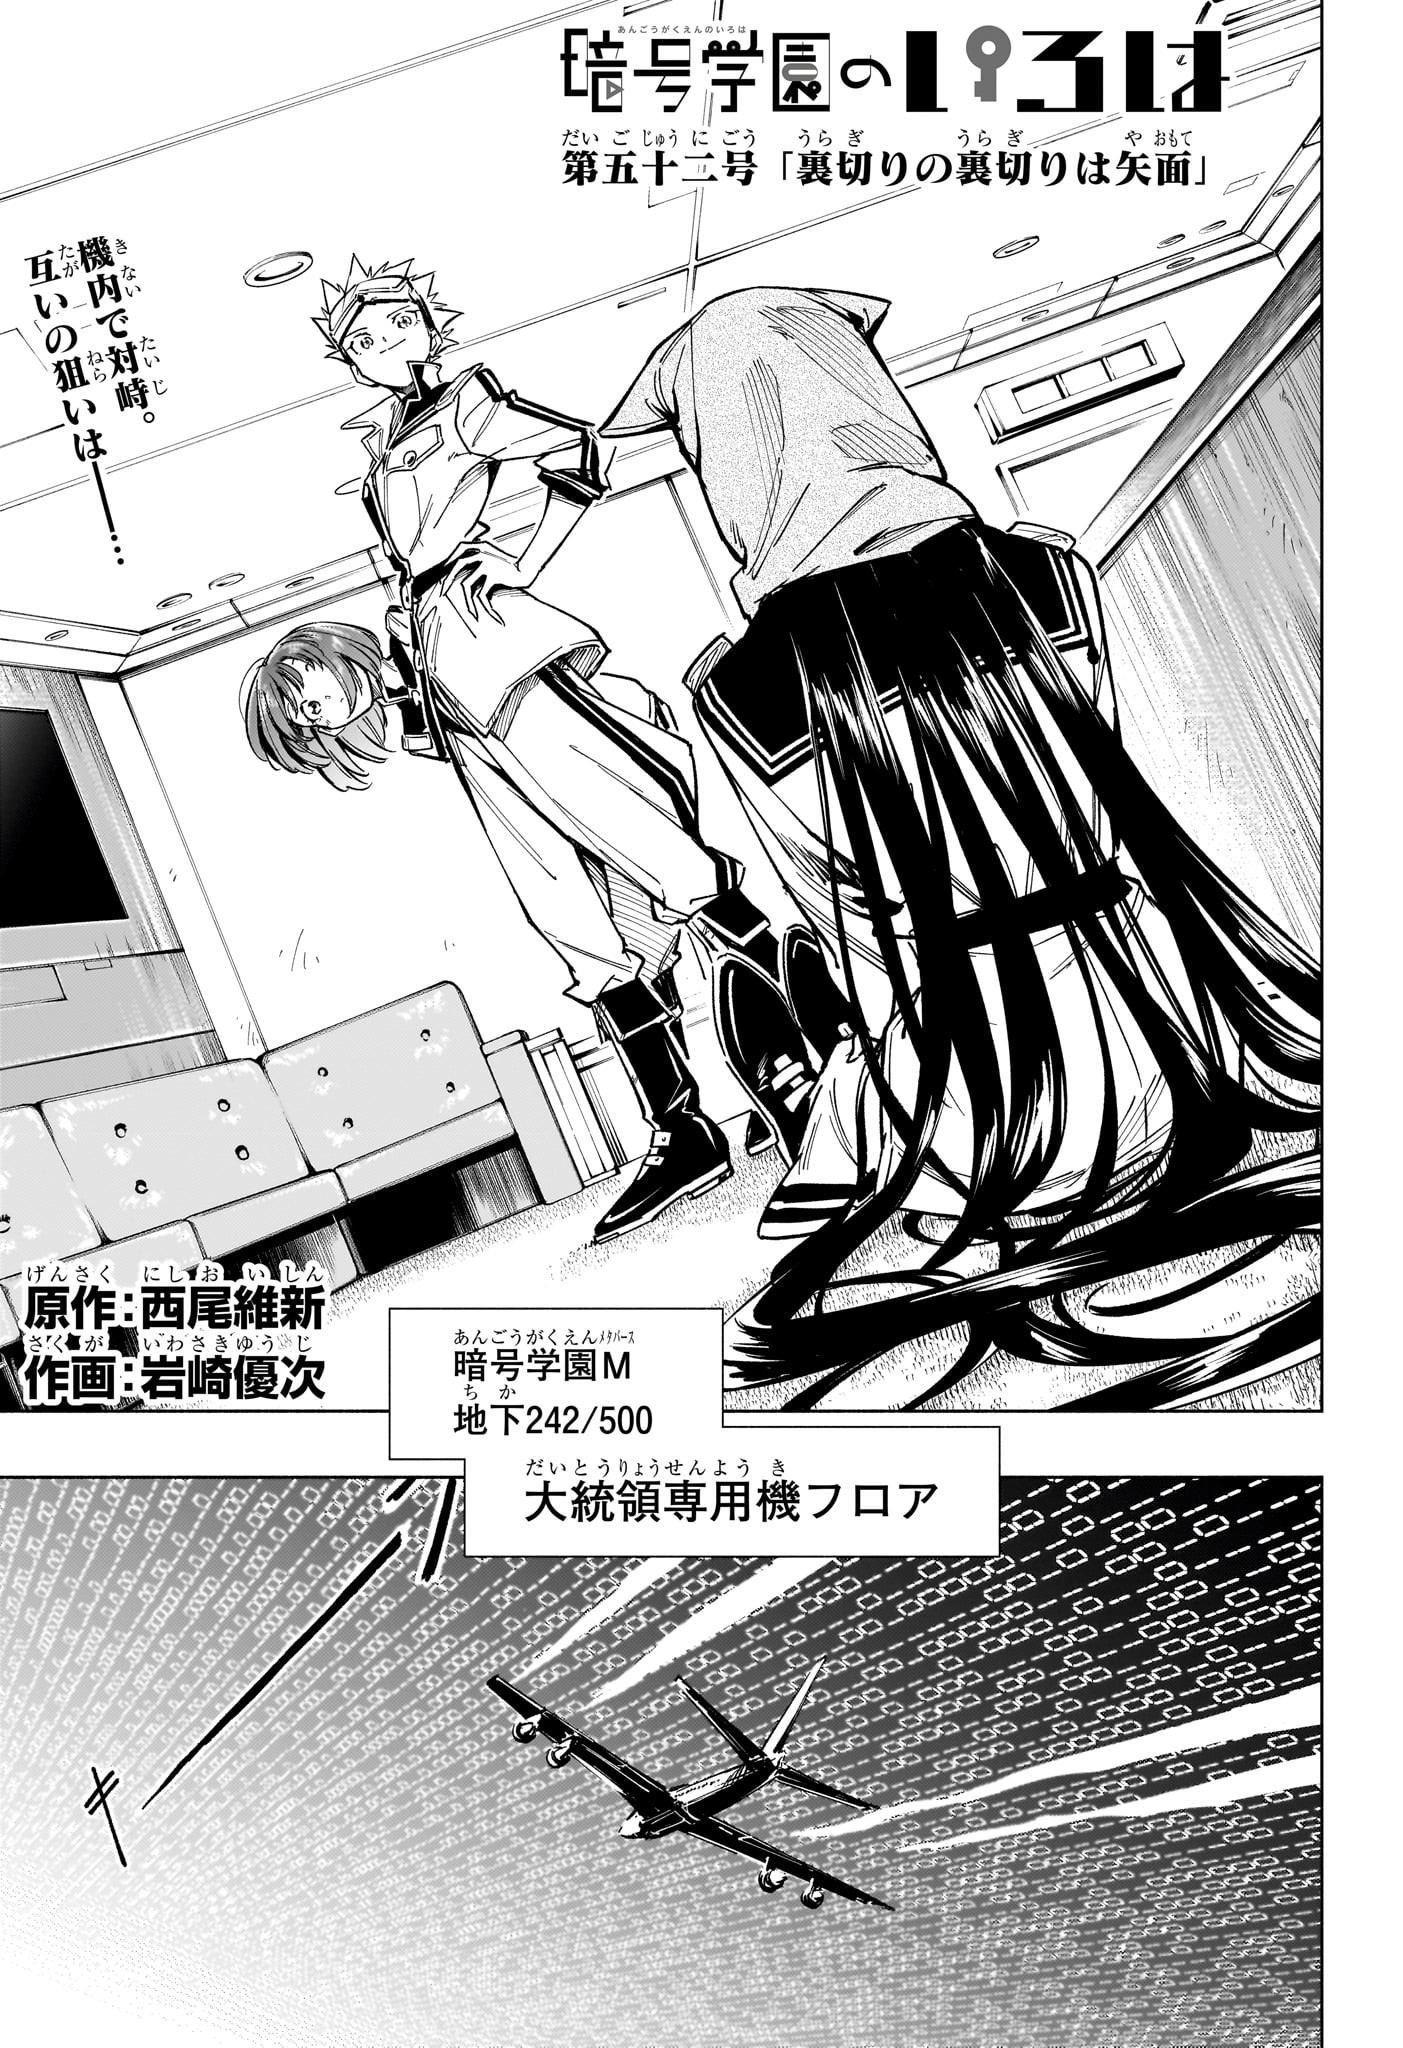 Angou Gakuen no Iroha - Chapter 52 - Page 1